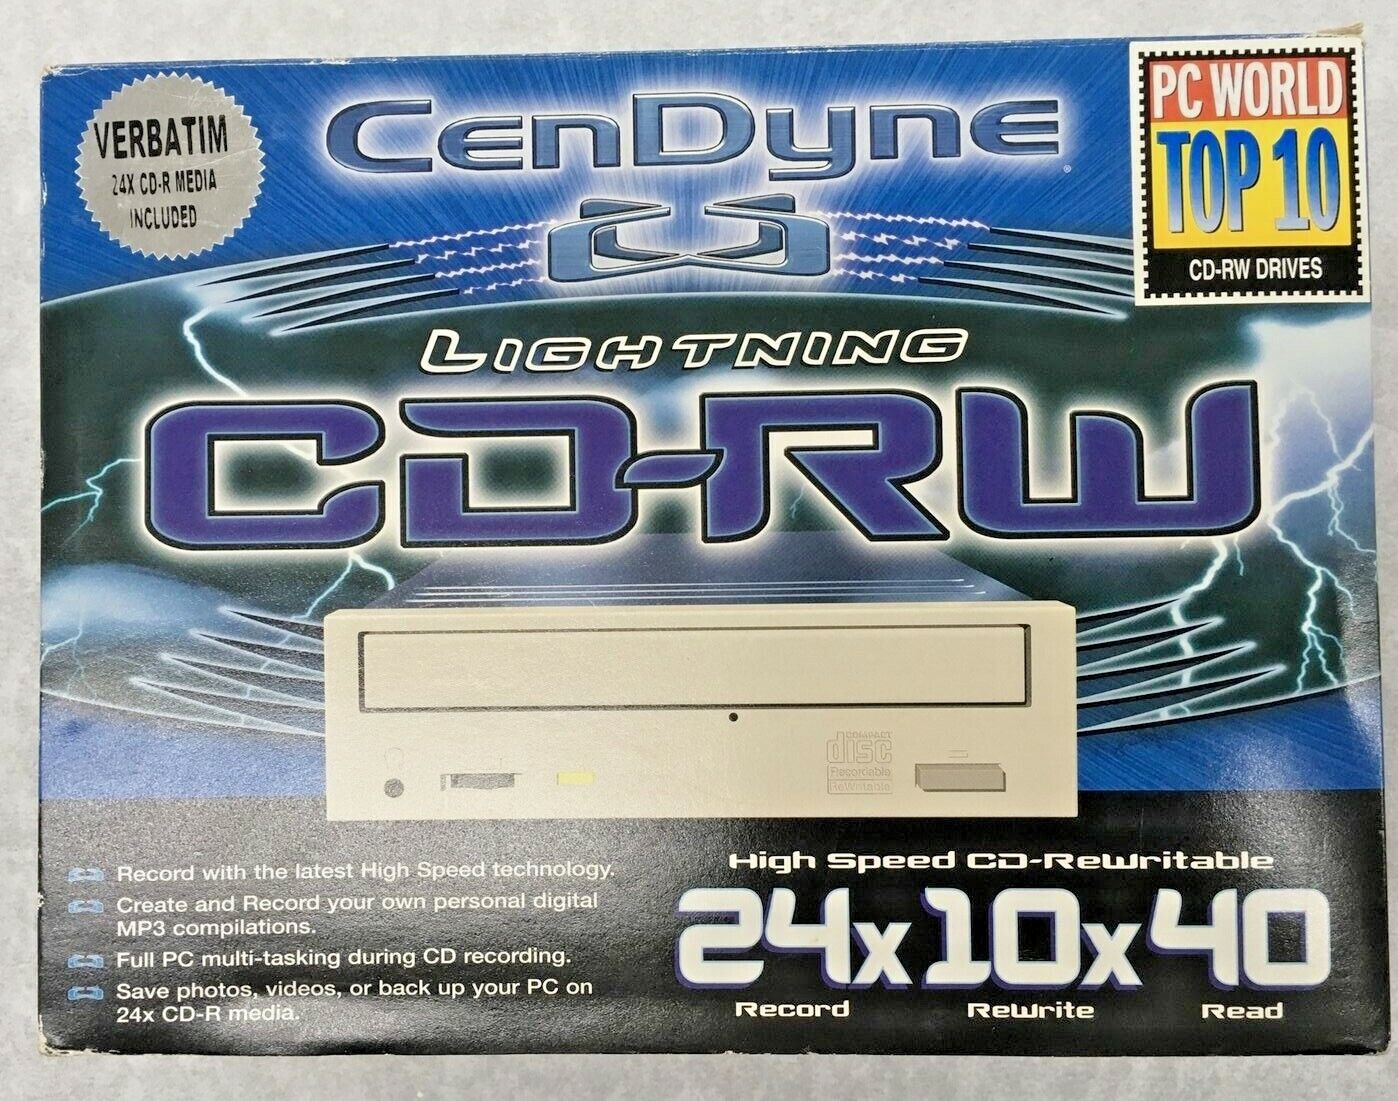 CenDyne Lightning CD-RW High Speed CD-Rewritable 24x10x40